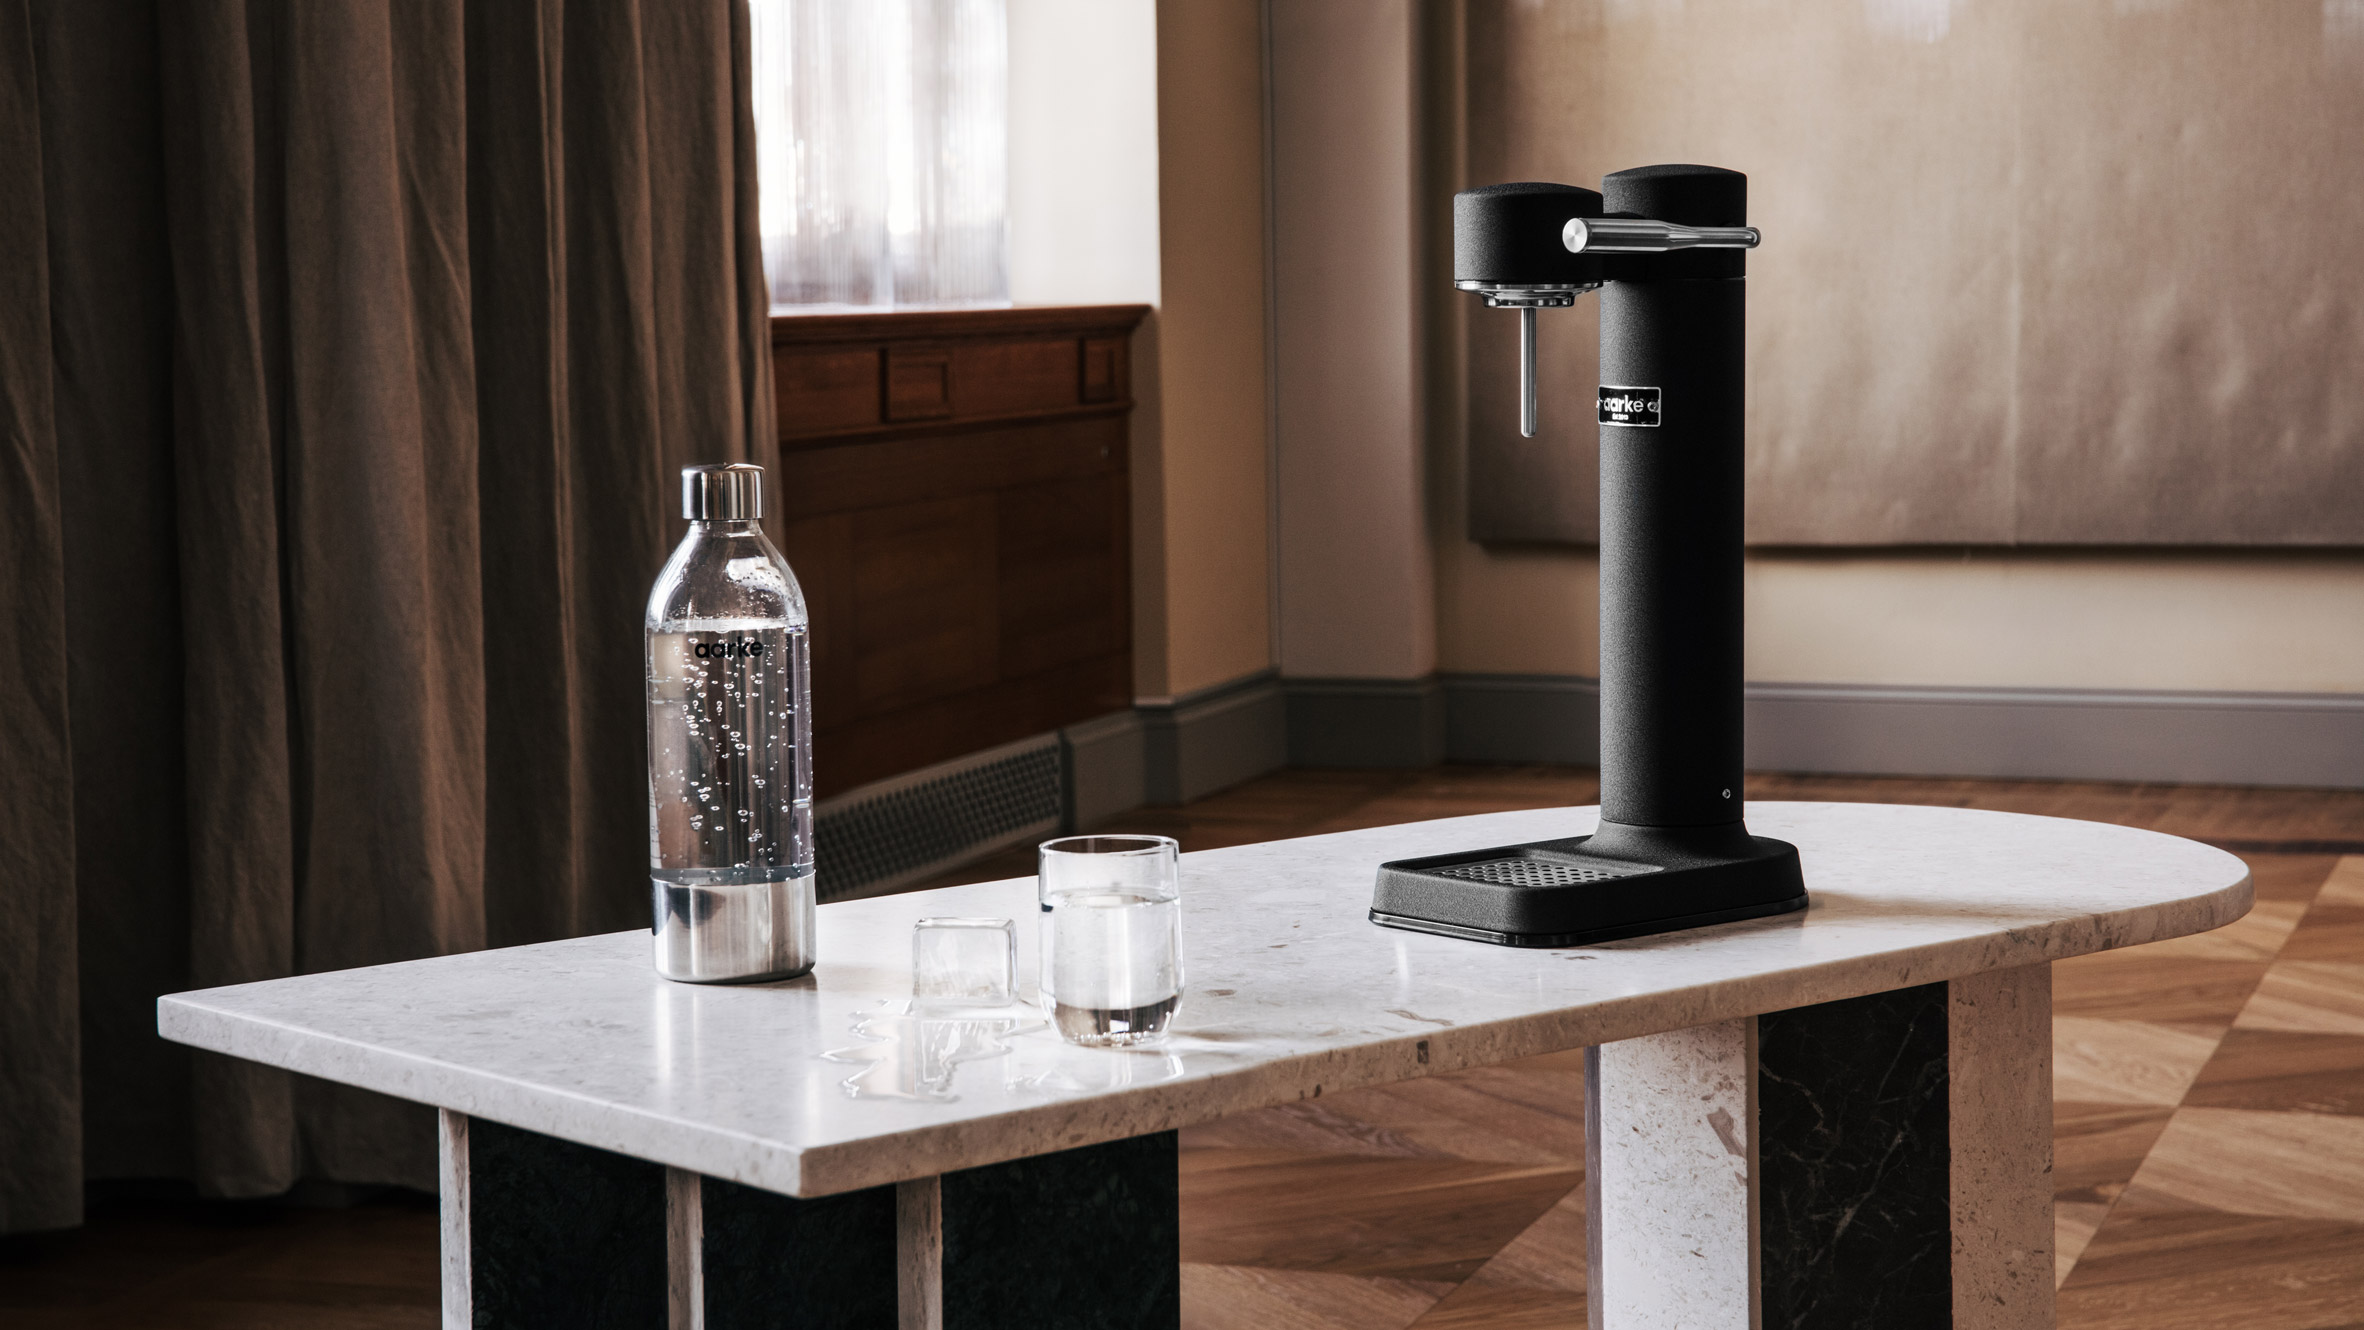 Aarke Carbonator 3 Sparkling Water Maker: A Classy SodaStream - Slinky  Studio